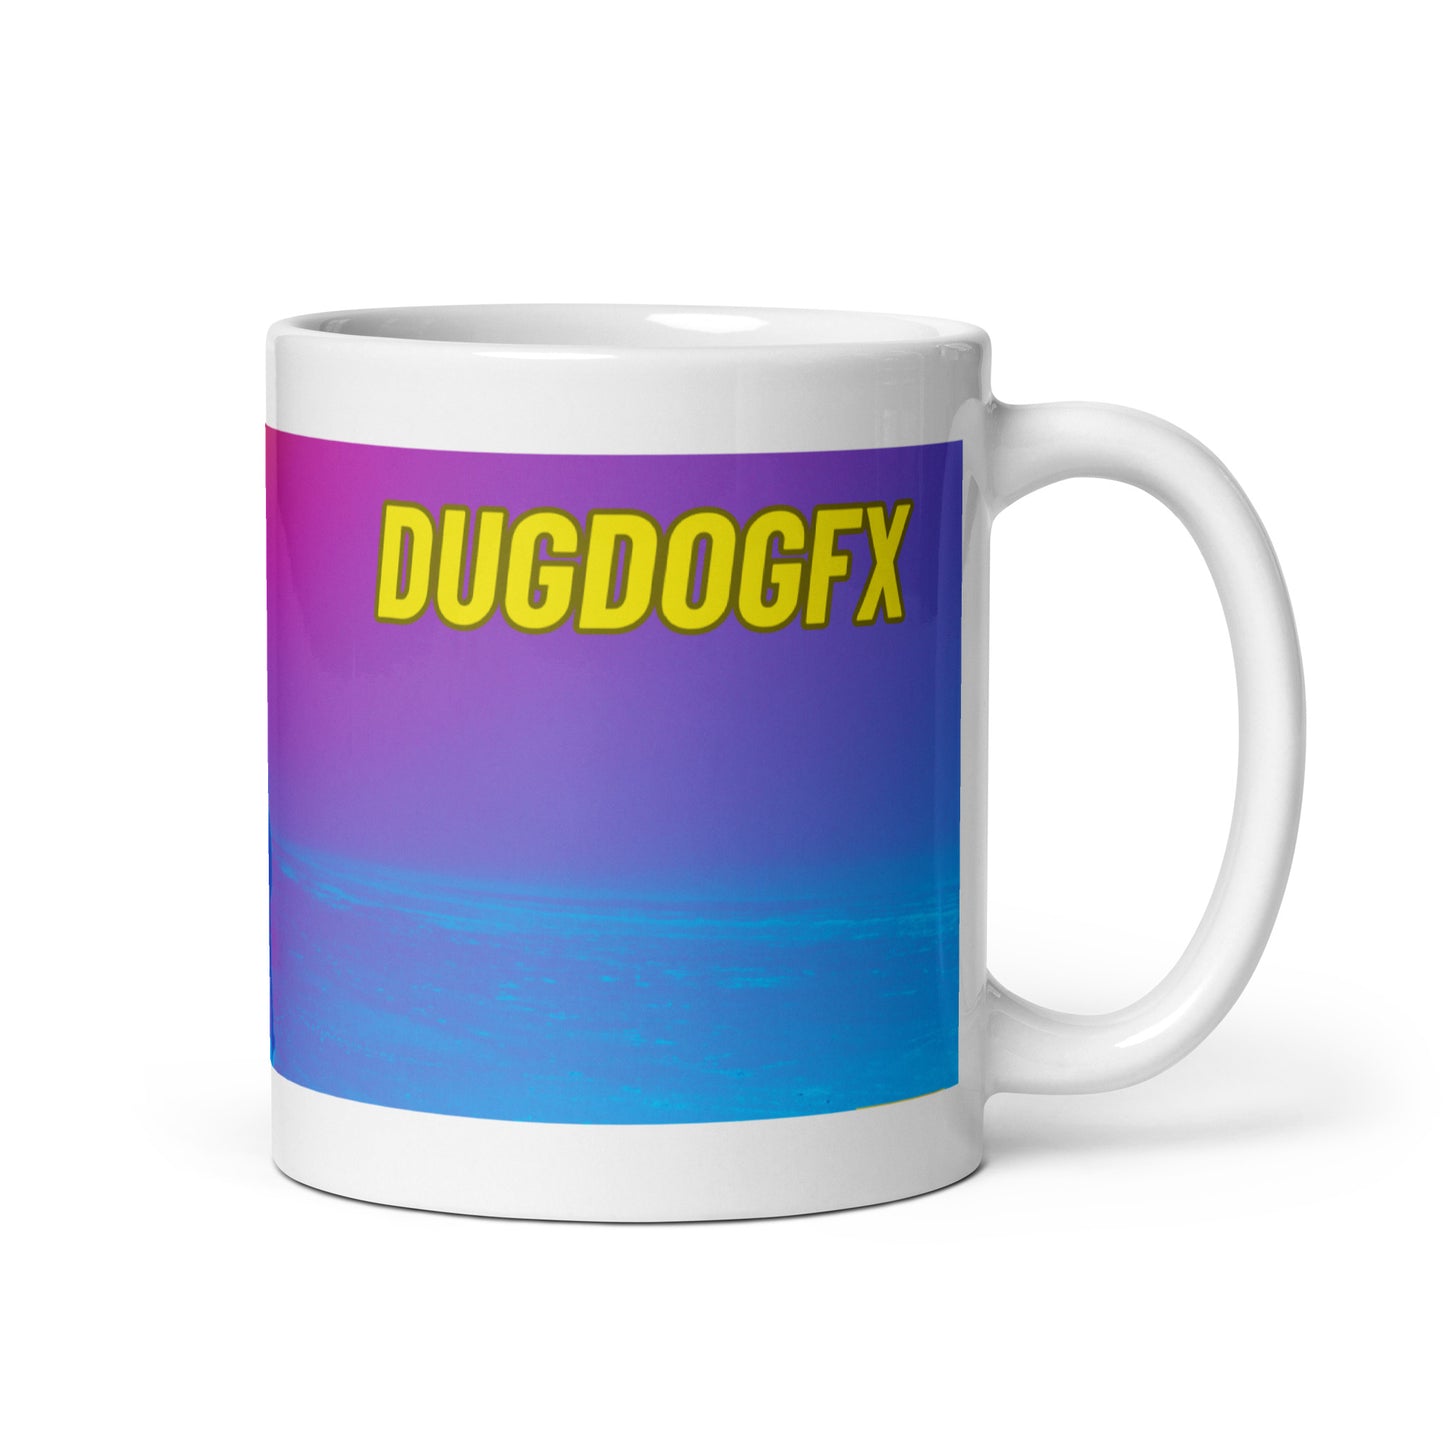 DugDogFX Silhouette White Glossy Mug